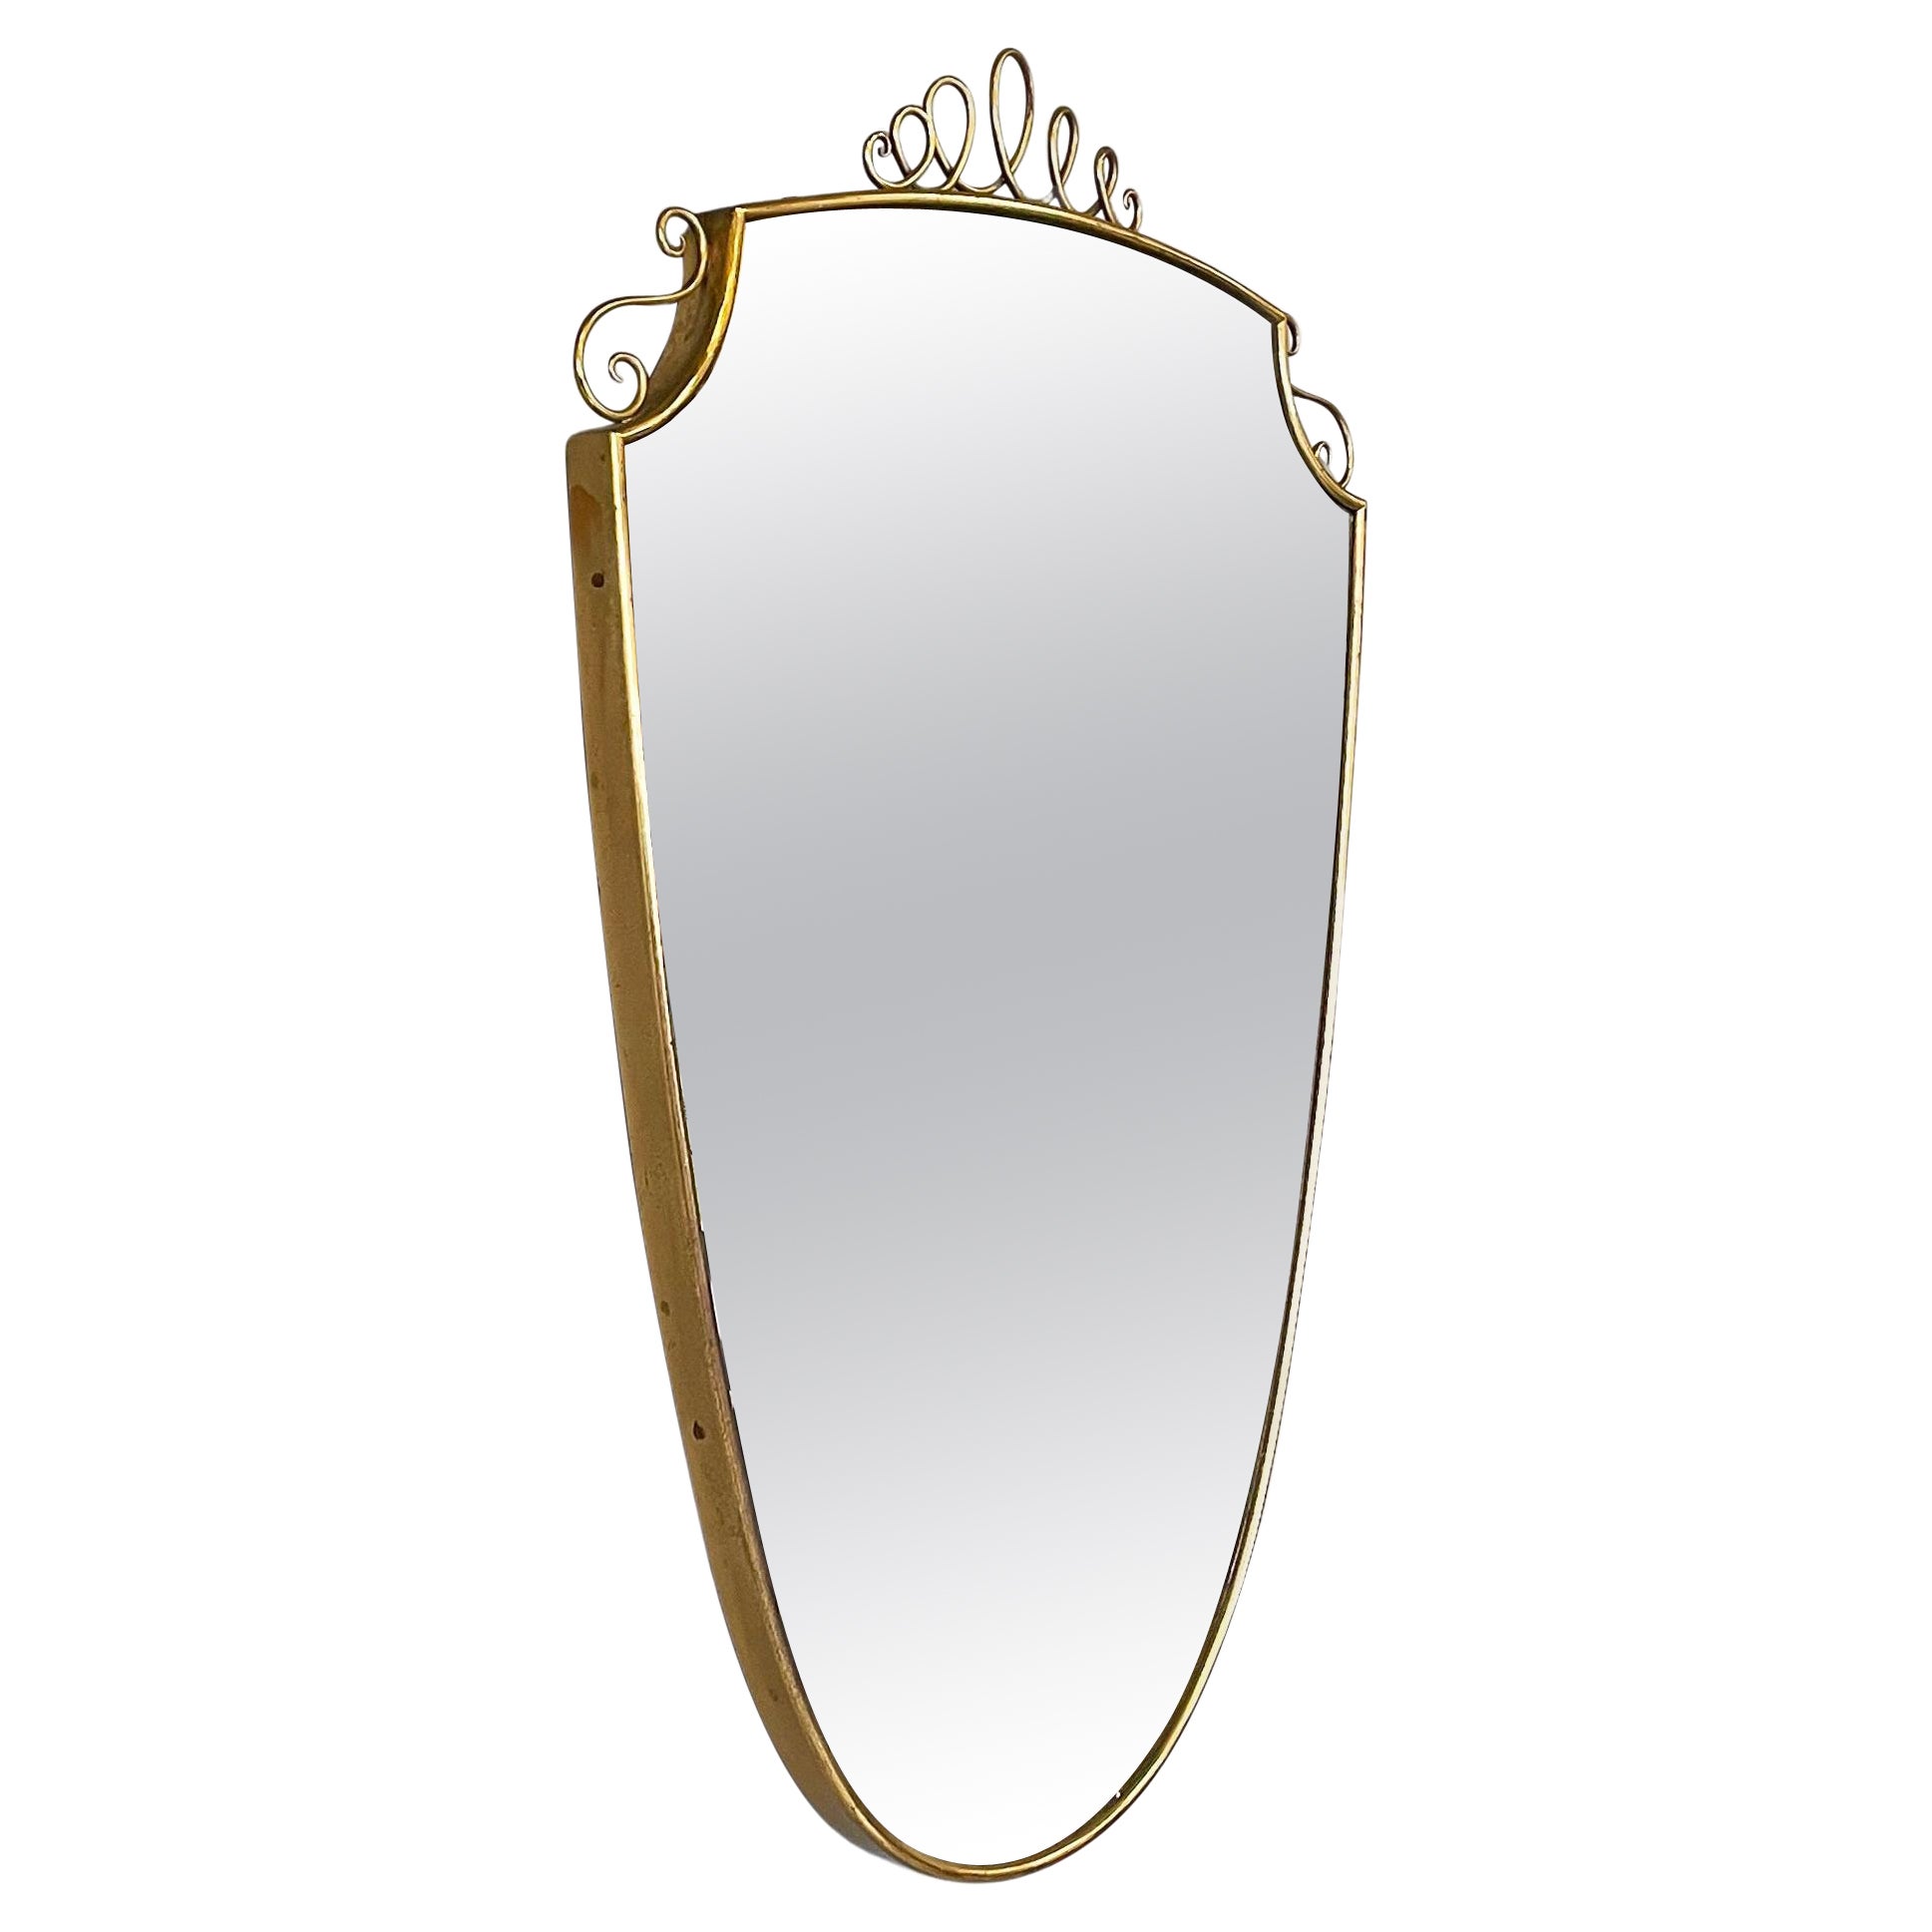 Italian mid-century modern Shield-shaped wall mirror with brass frame, 1950s